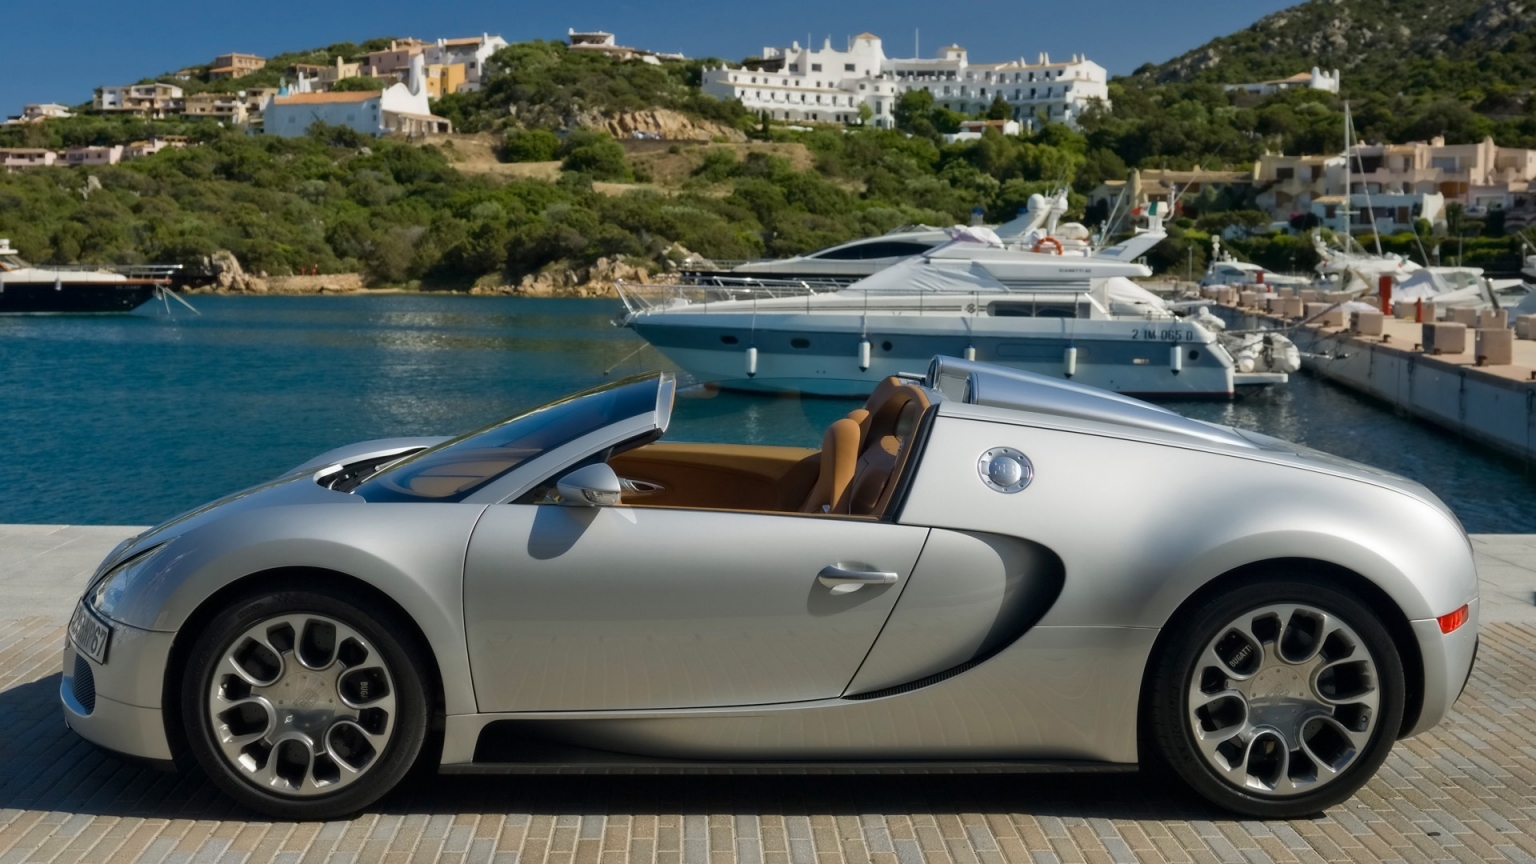 Bugatti Veyron 16.4 Grand Sport in Sardinia 2010 - Side for 1536 x 864 HDTV resolution